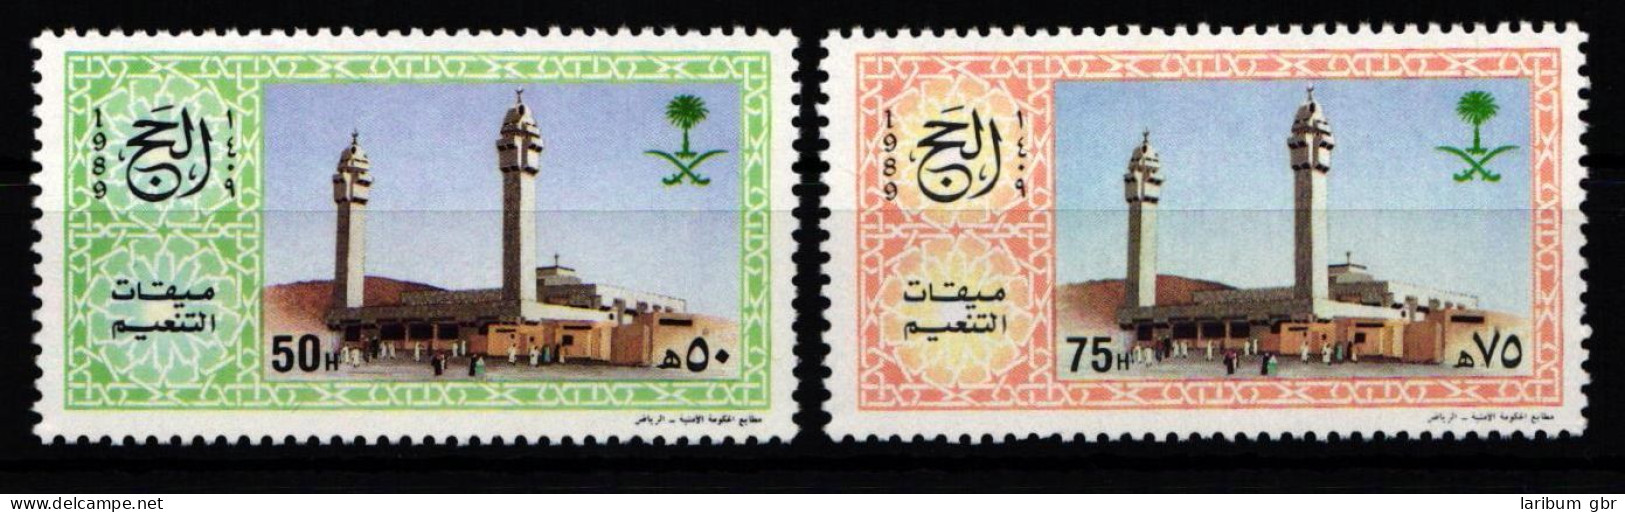 Saudi Arabien 950-951 Postfrisch #JZ716 - Arabia Saudita